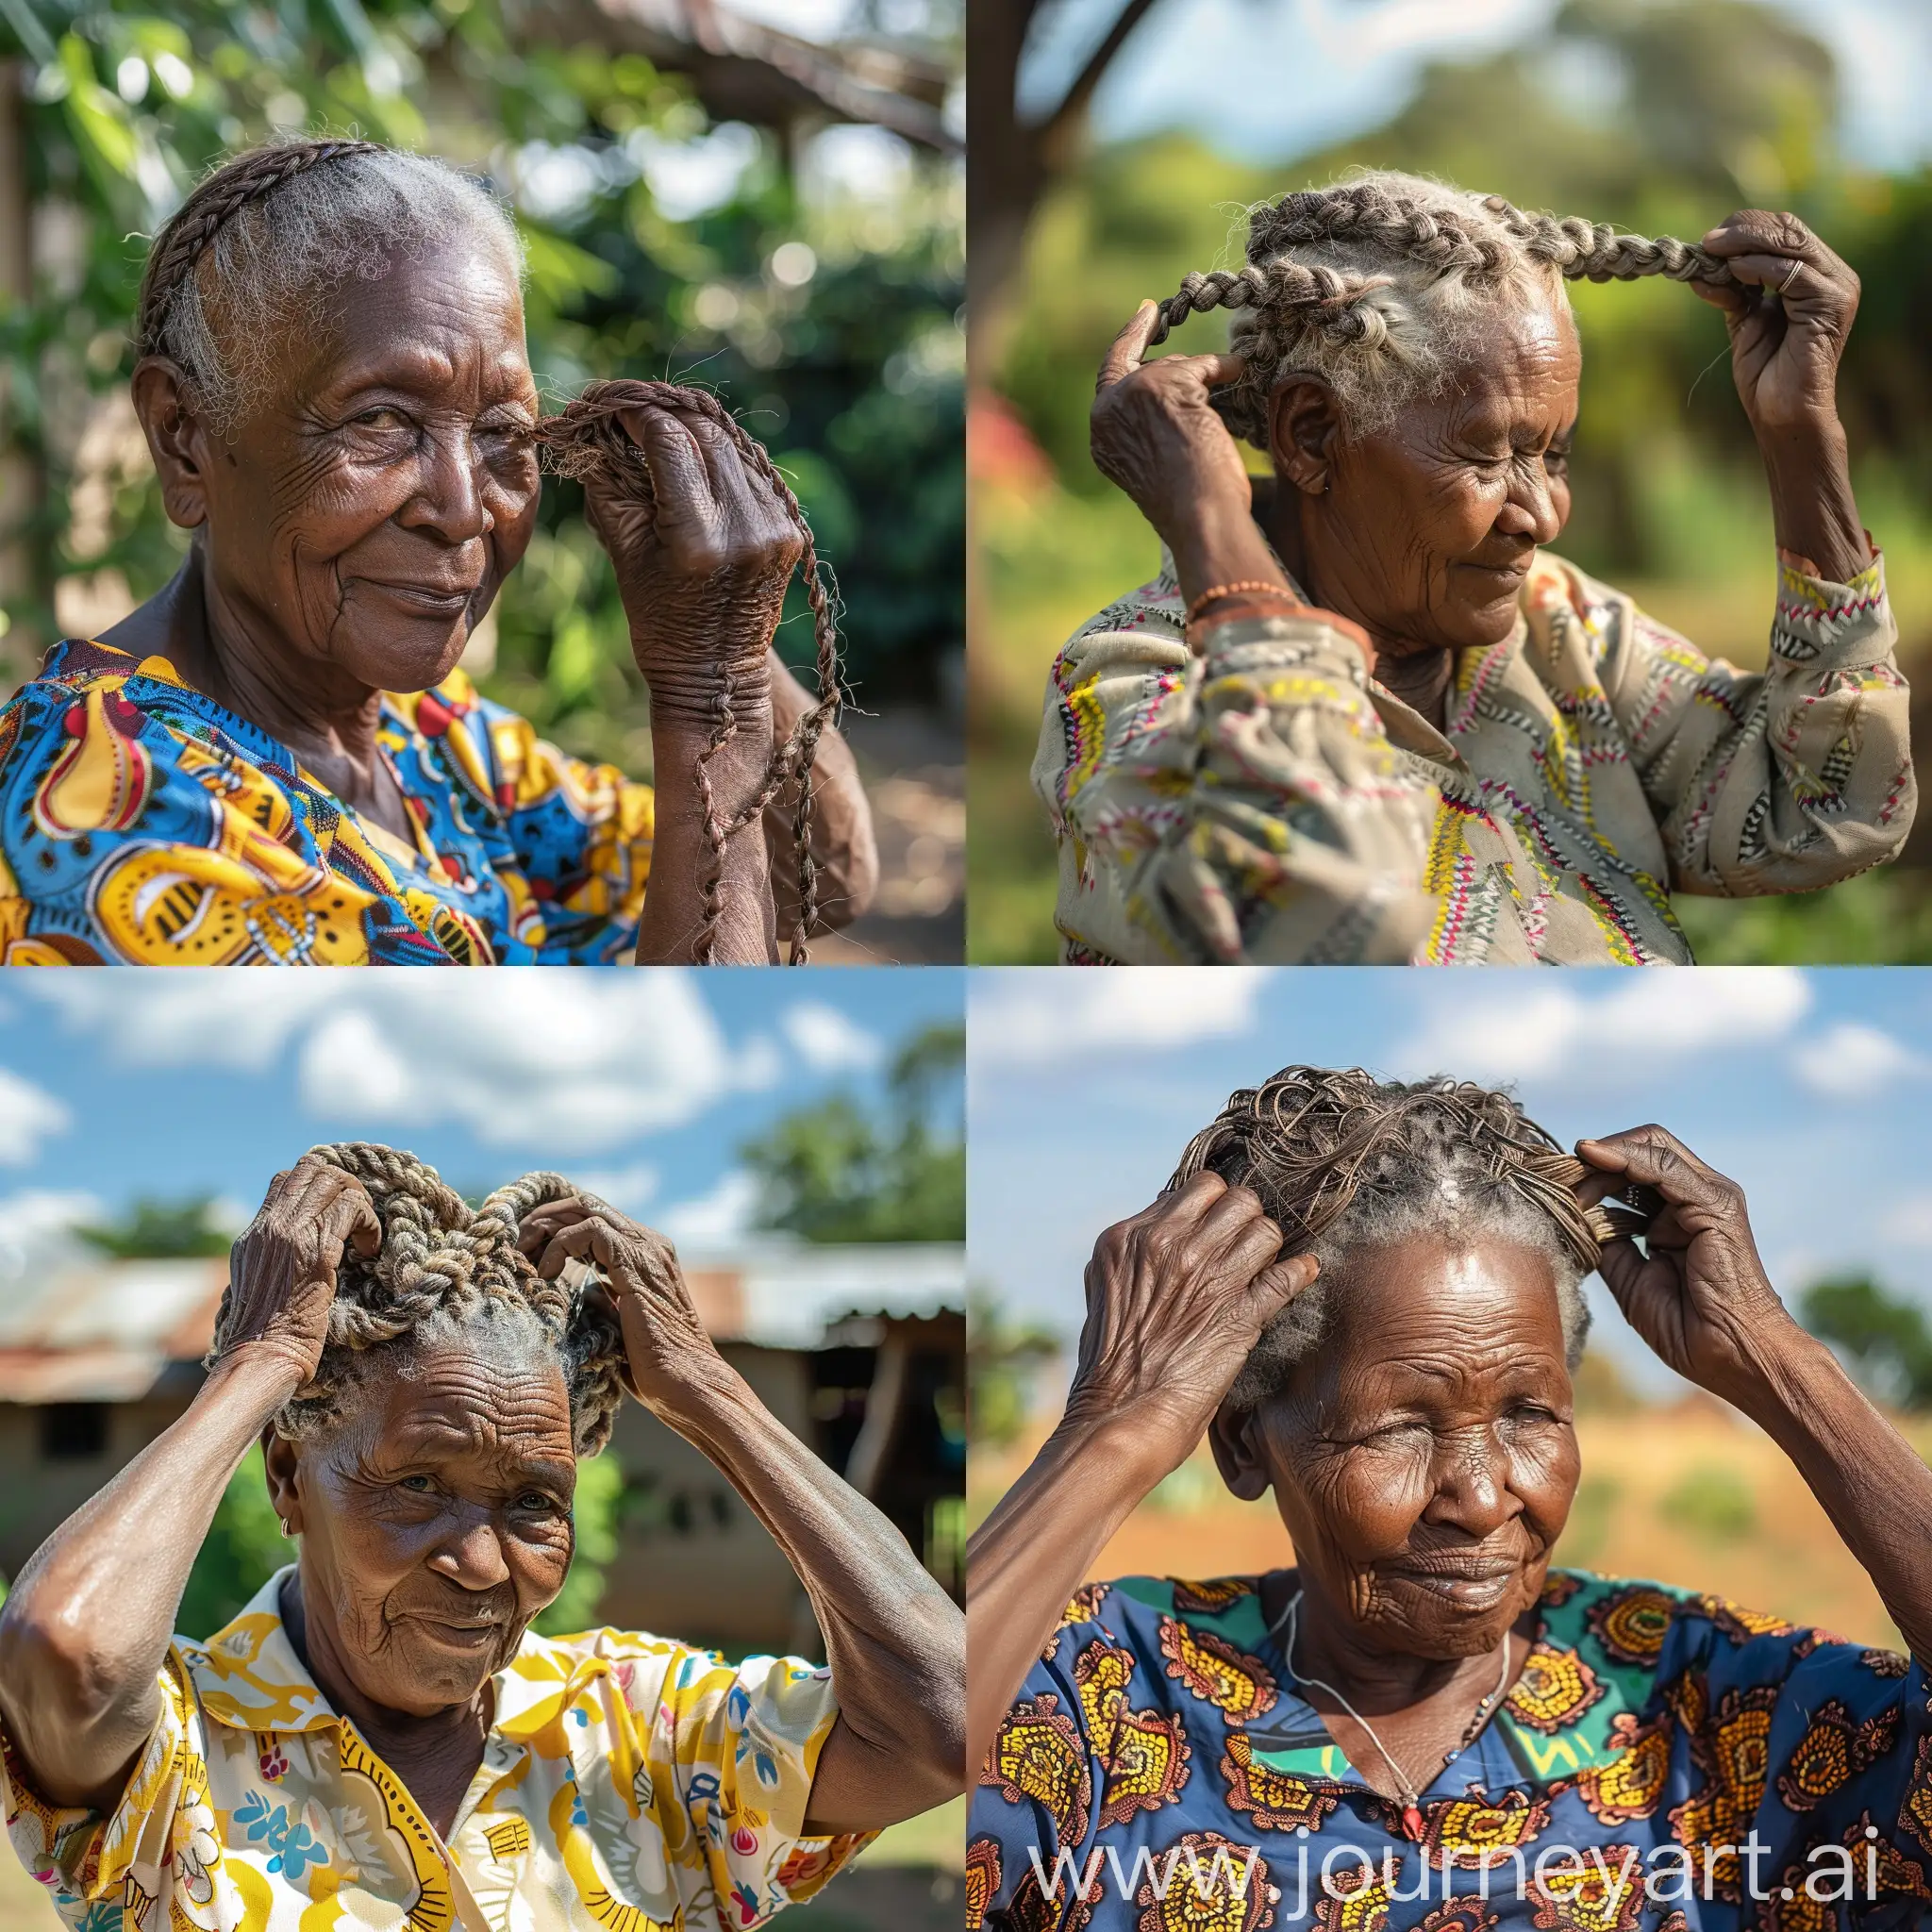 Elderly-African-Woman-Braiding-Hair-Outdoors-in-Sunlight